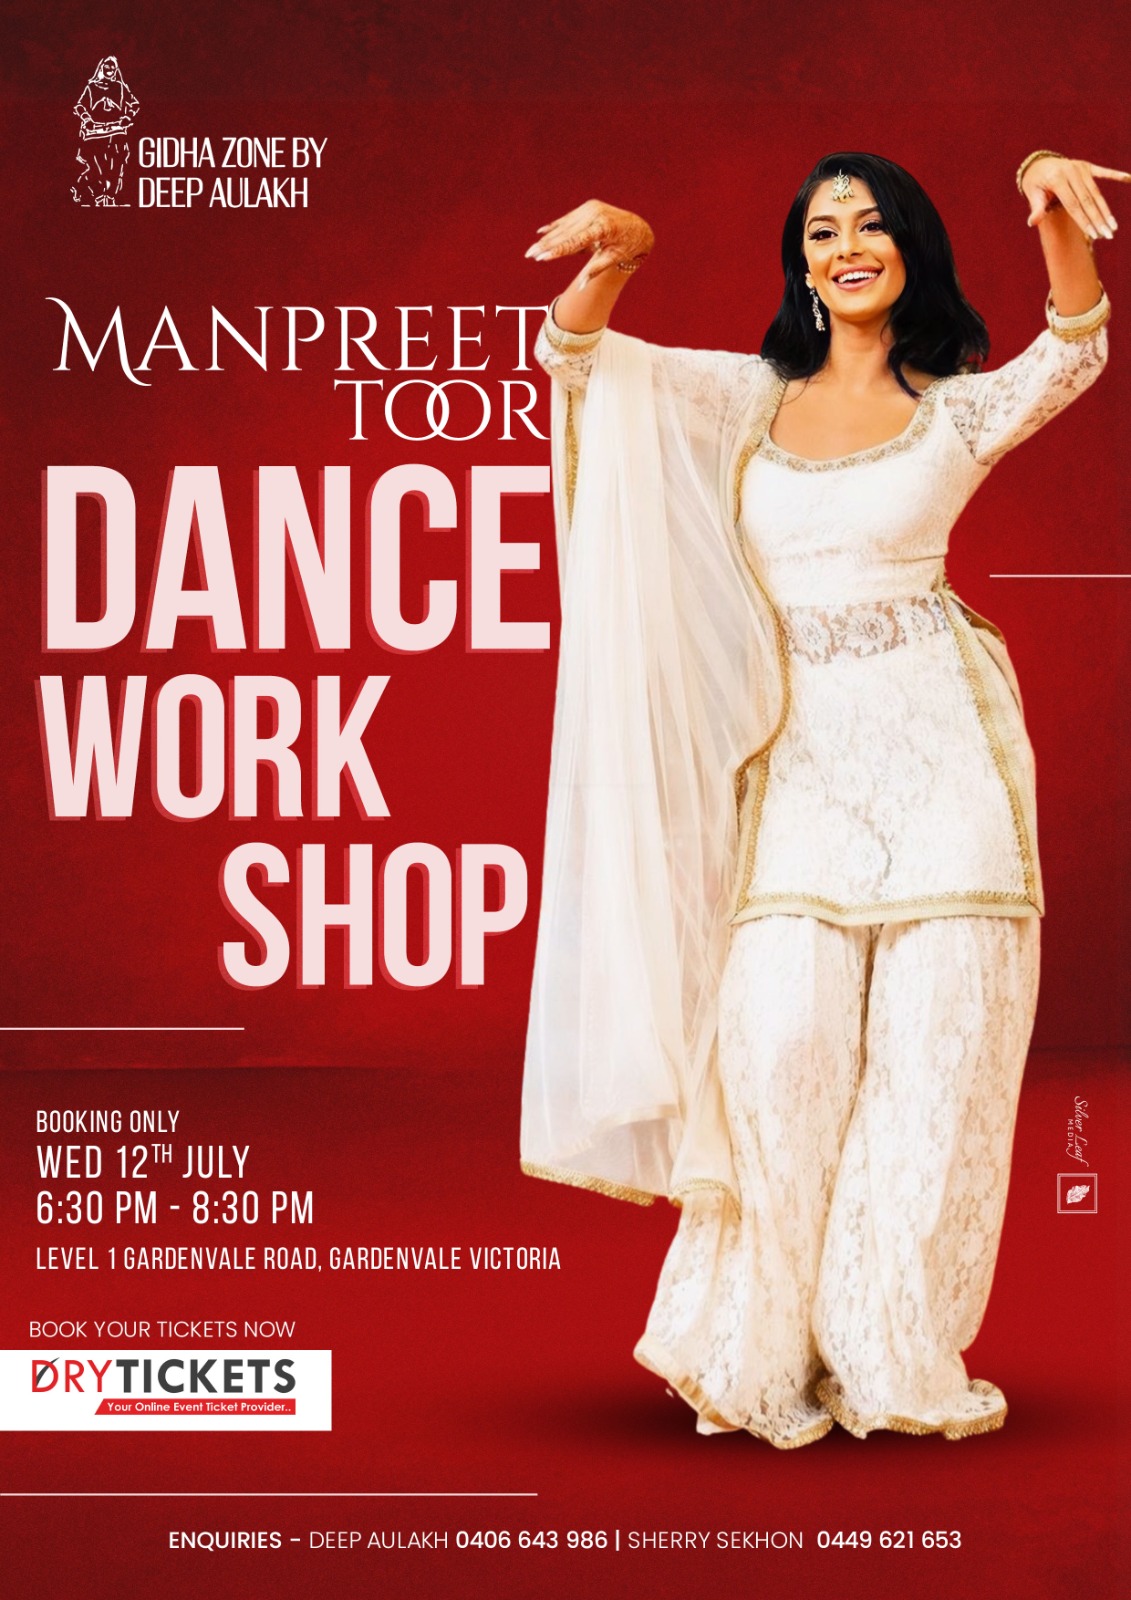 Manpreet Toor Dance Work Shop Melbourne